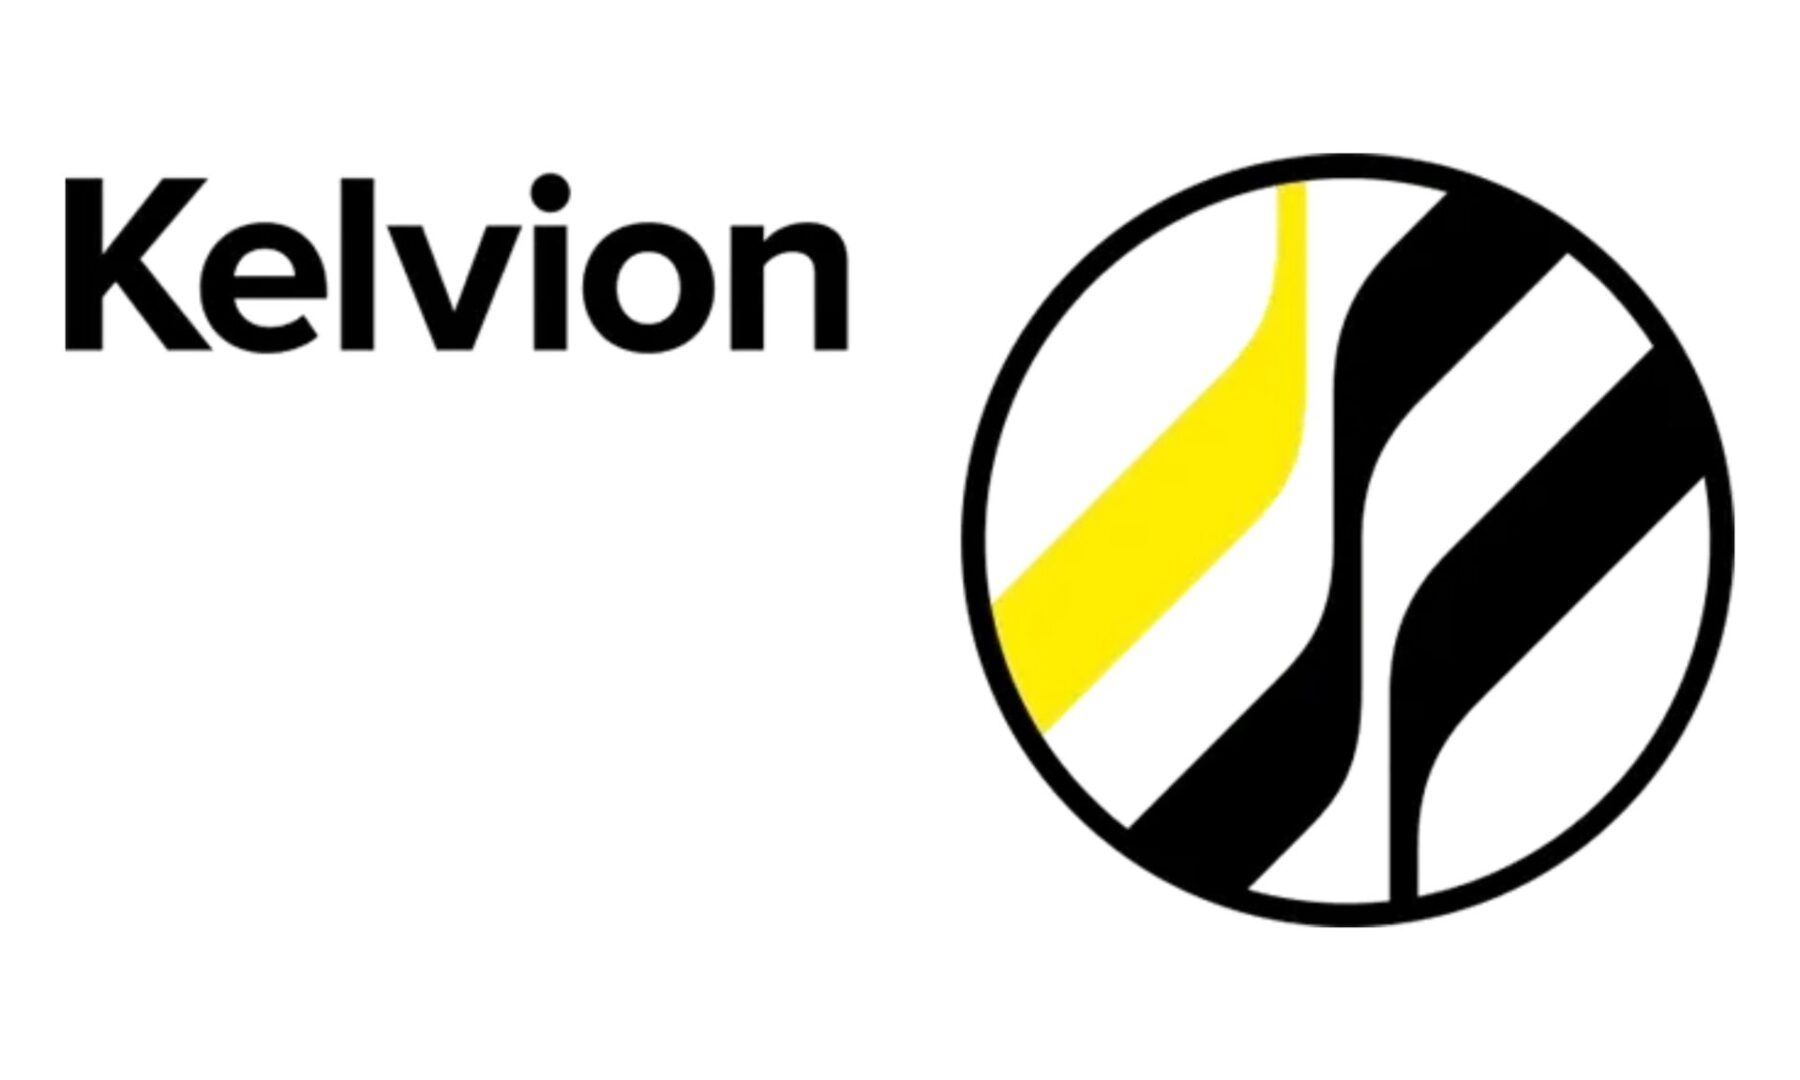 A logo of the alvion company